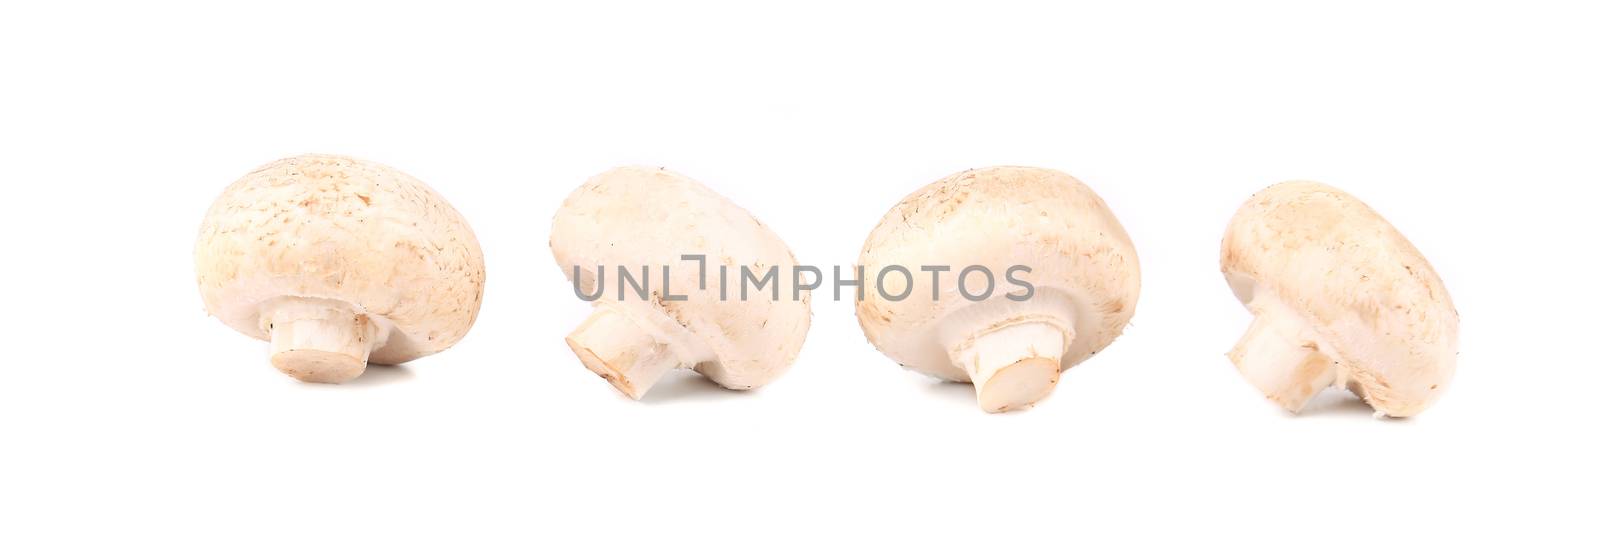 White mushrooms close up. by indigolotos